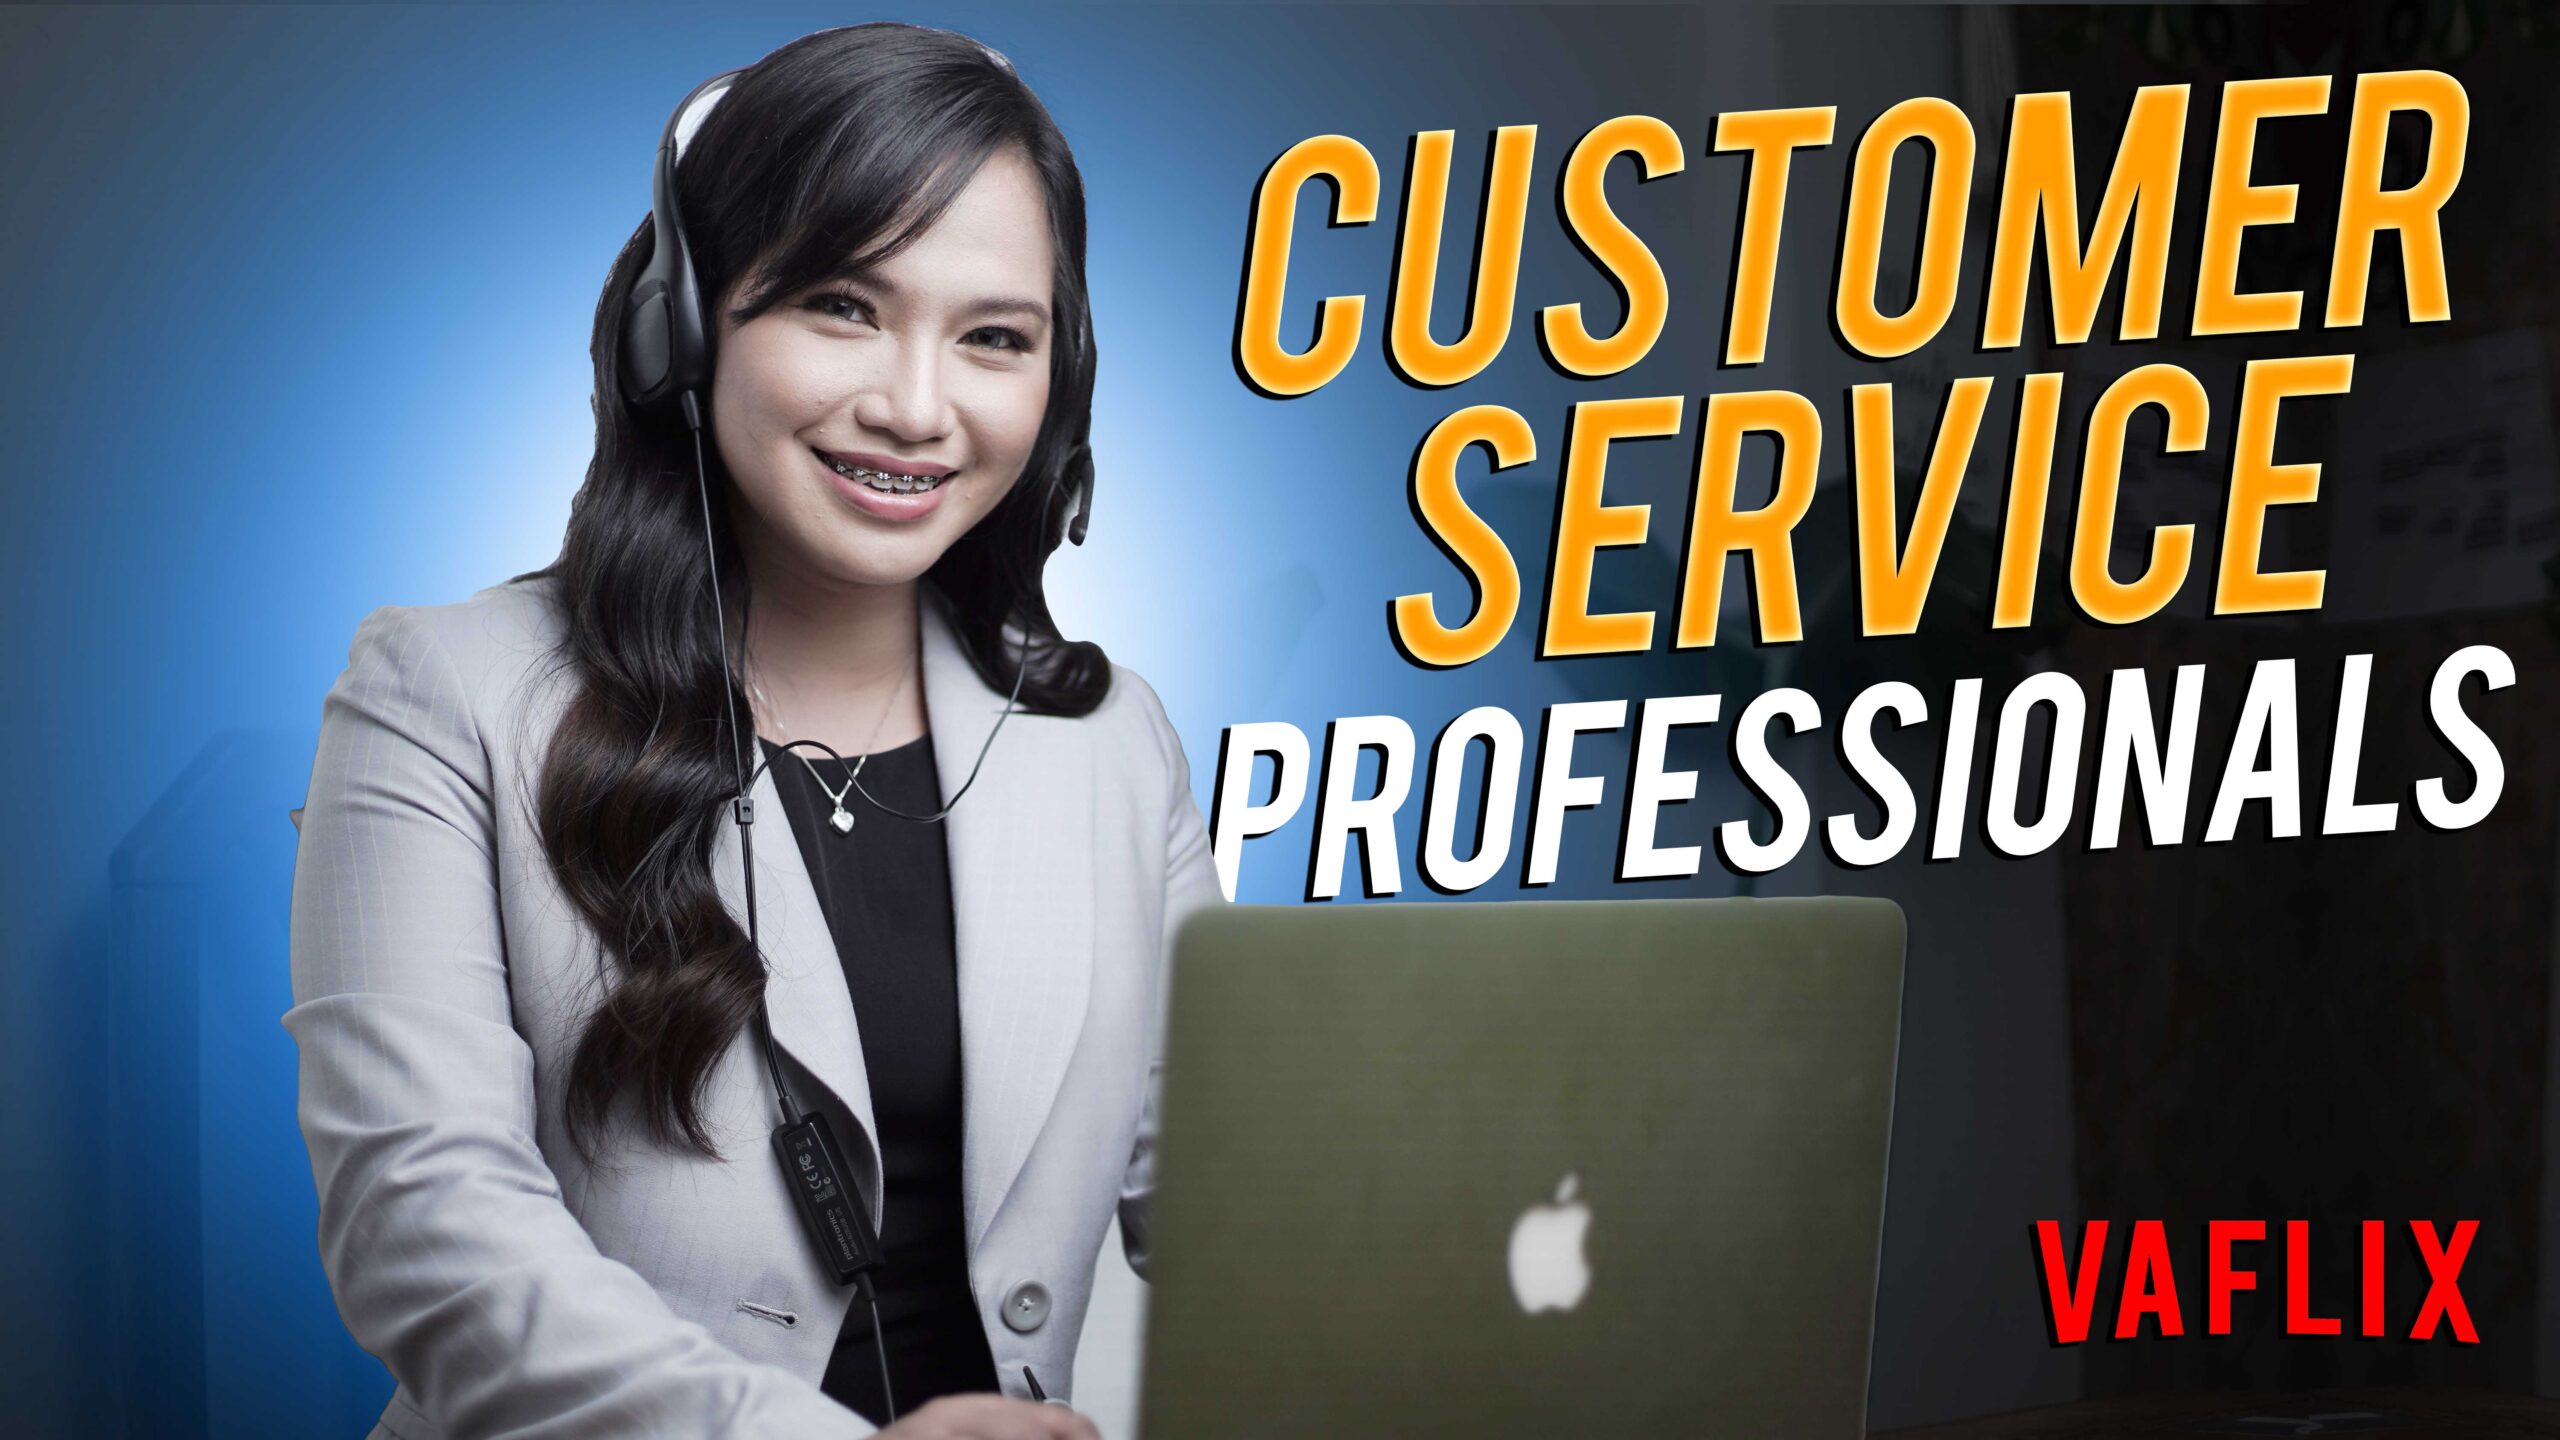 remote customer service philippines hire virtual assistant for customer service vaflix va flix